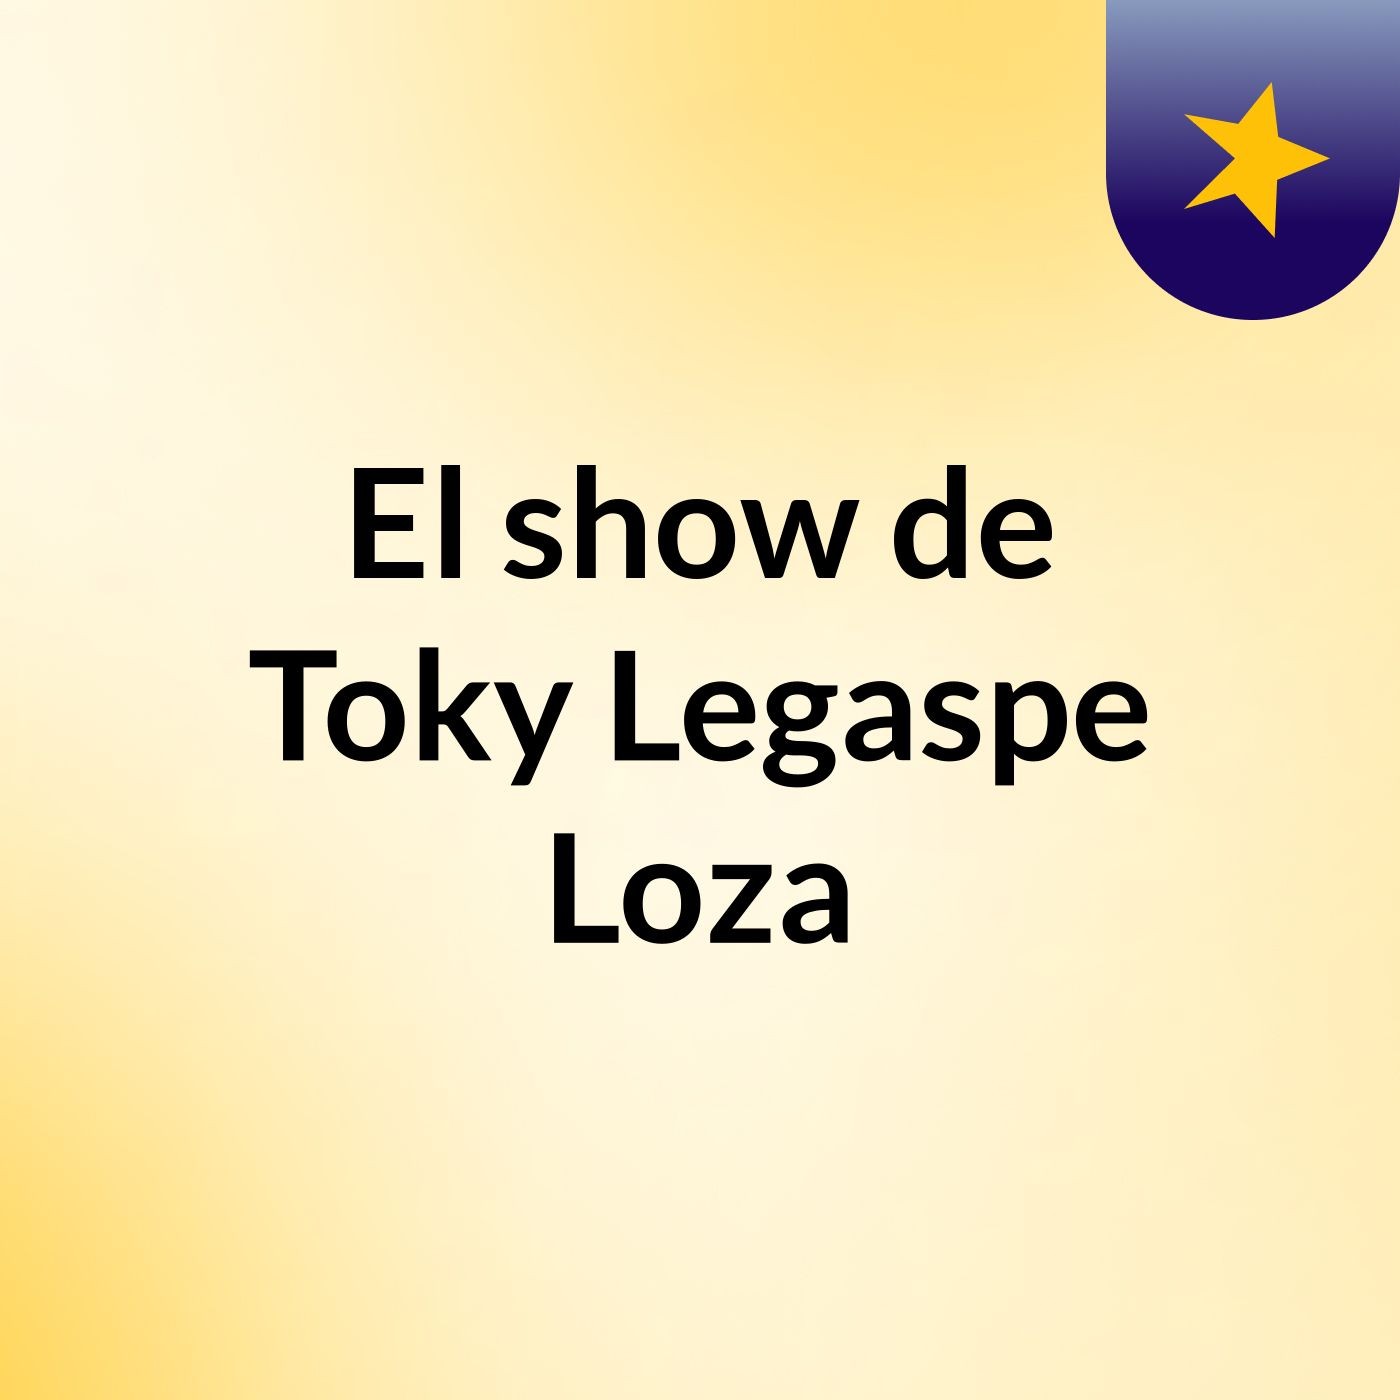 El show de Toky Legaspe Loza